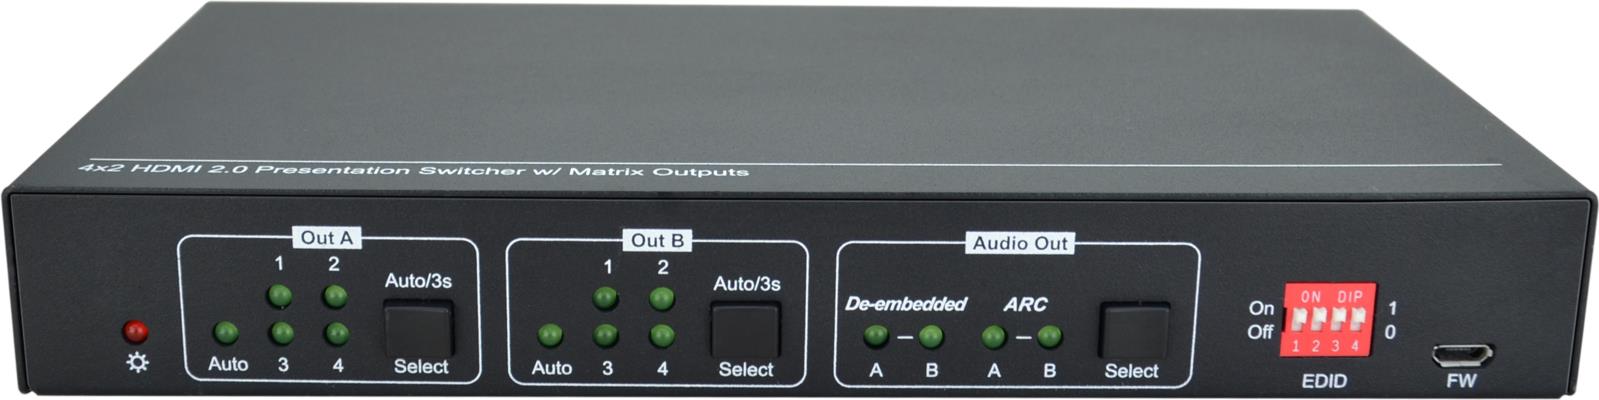 VIVOLINK HDMI 2.0 4x2, Matrix switcher (VLHDMIMAT4X2RS)